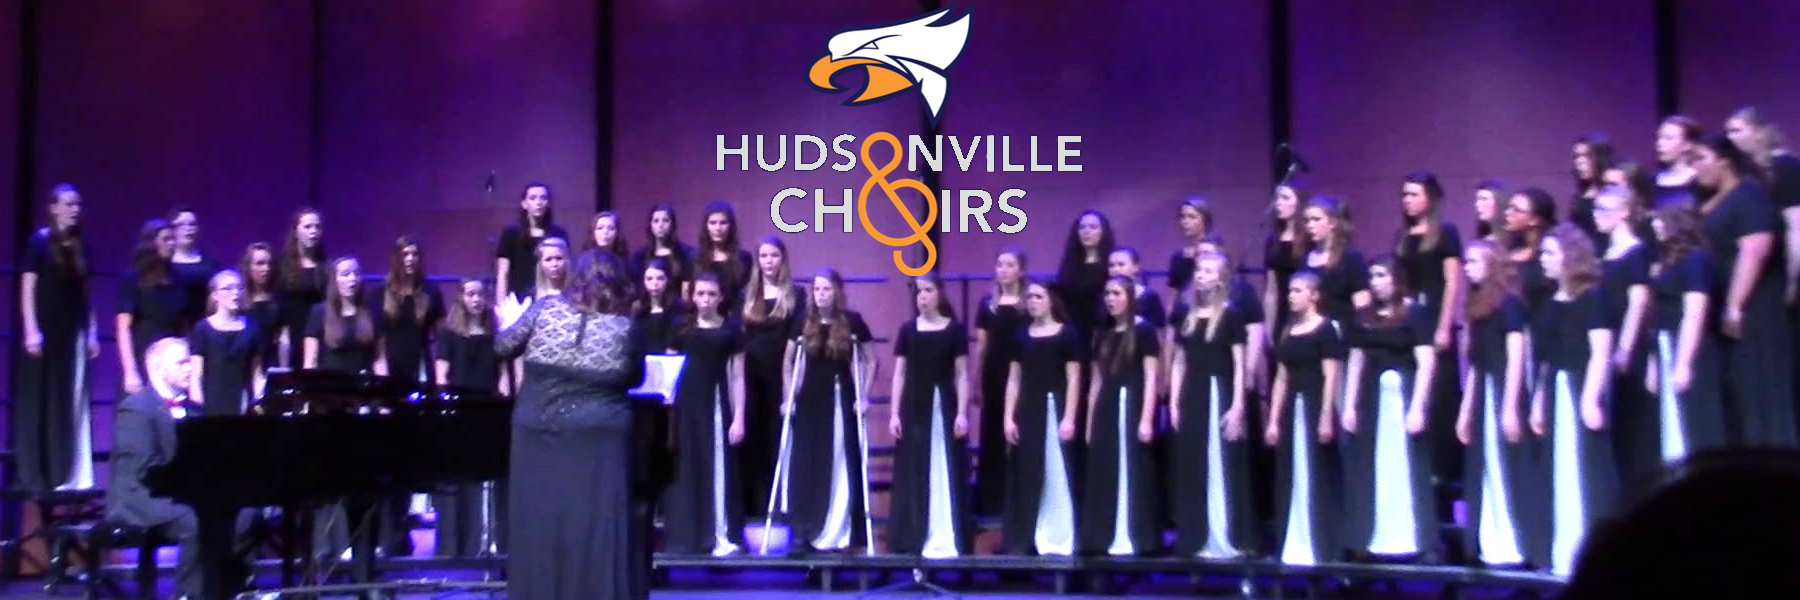 Hudsonville Choirs